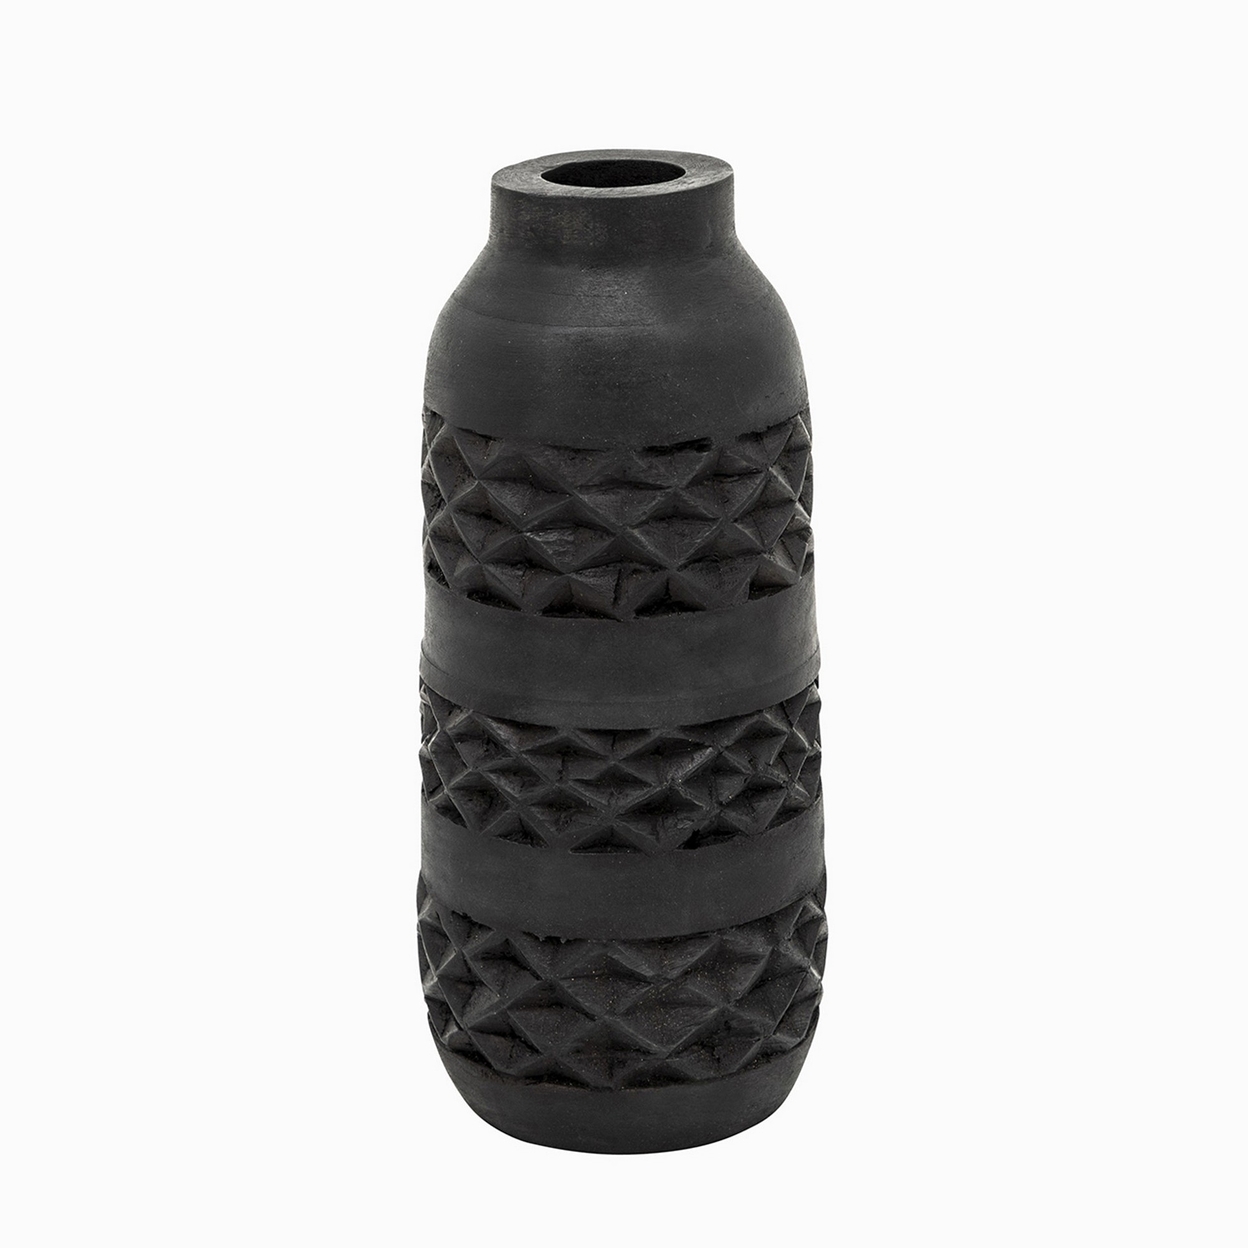 Yuka 12 Inch Vase, Bottle Shape, Embossed Diamond Patterns, Stained Black -Saltoro Sherpi